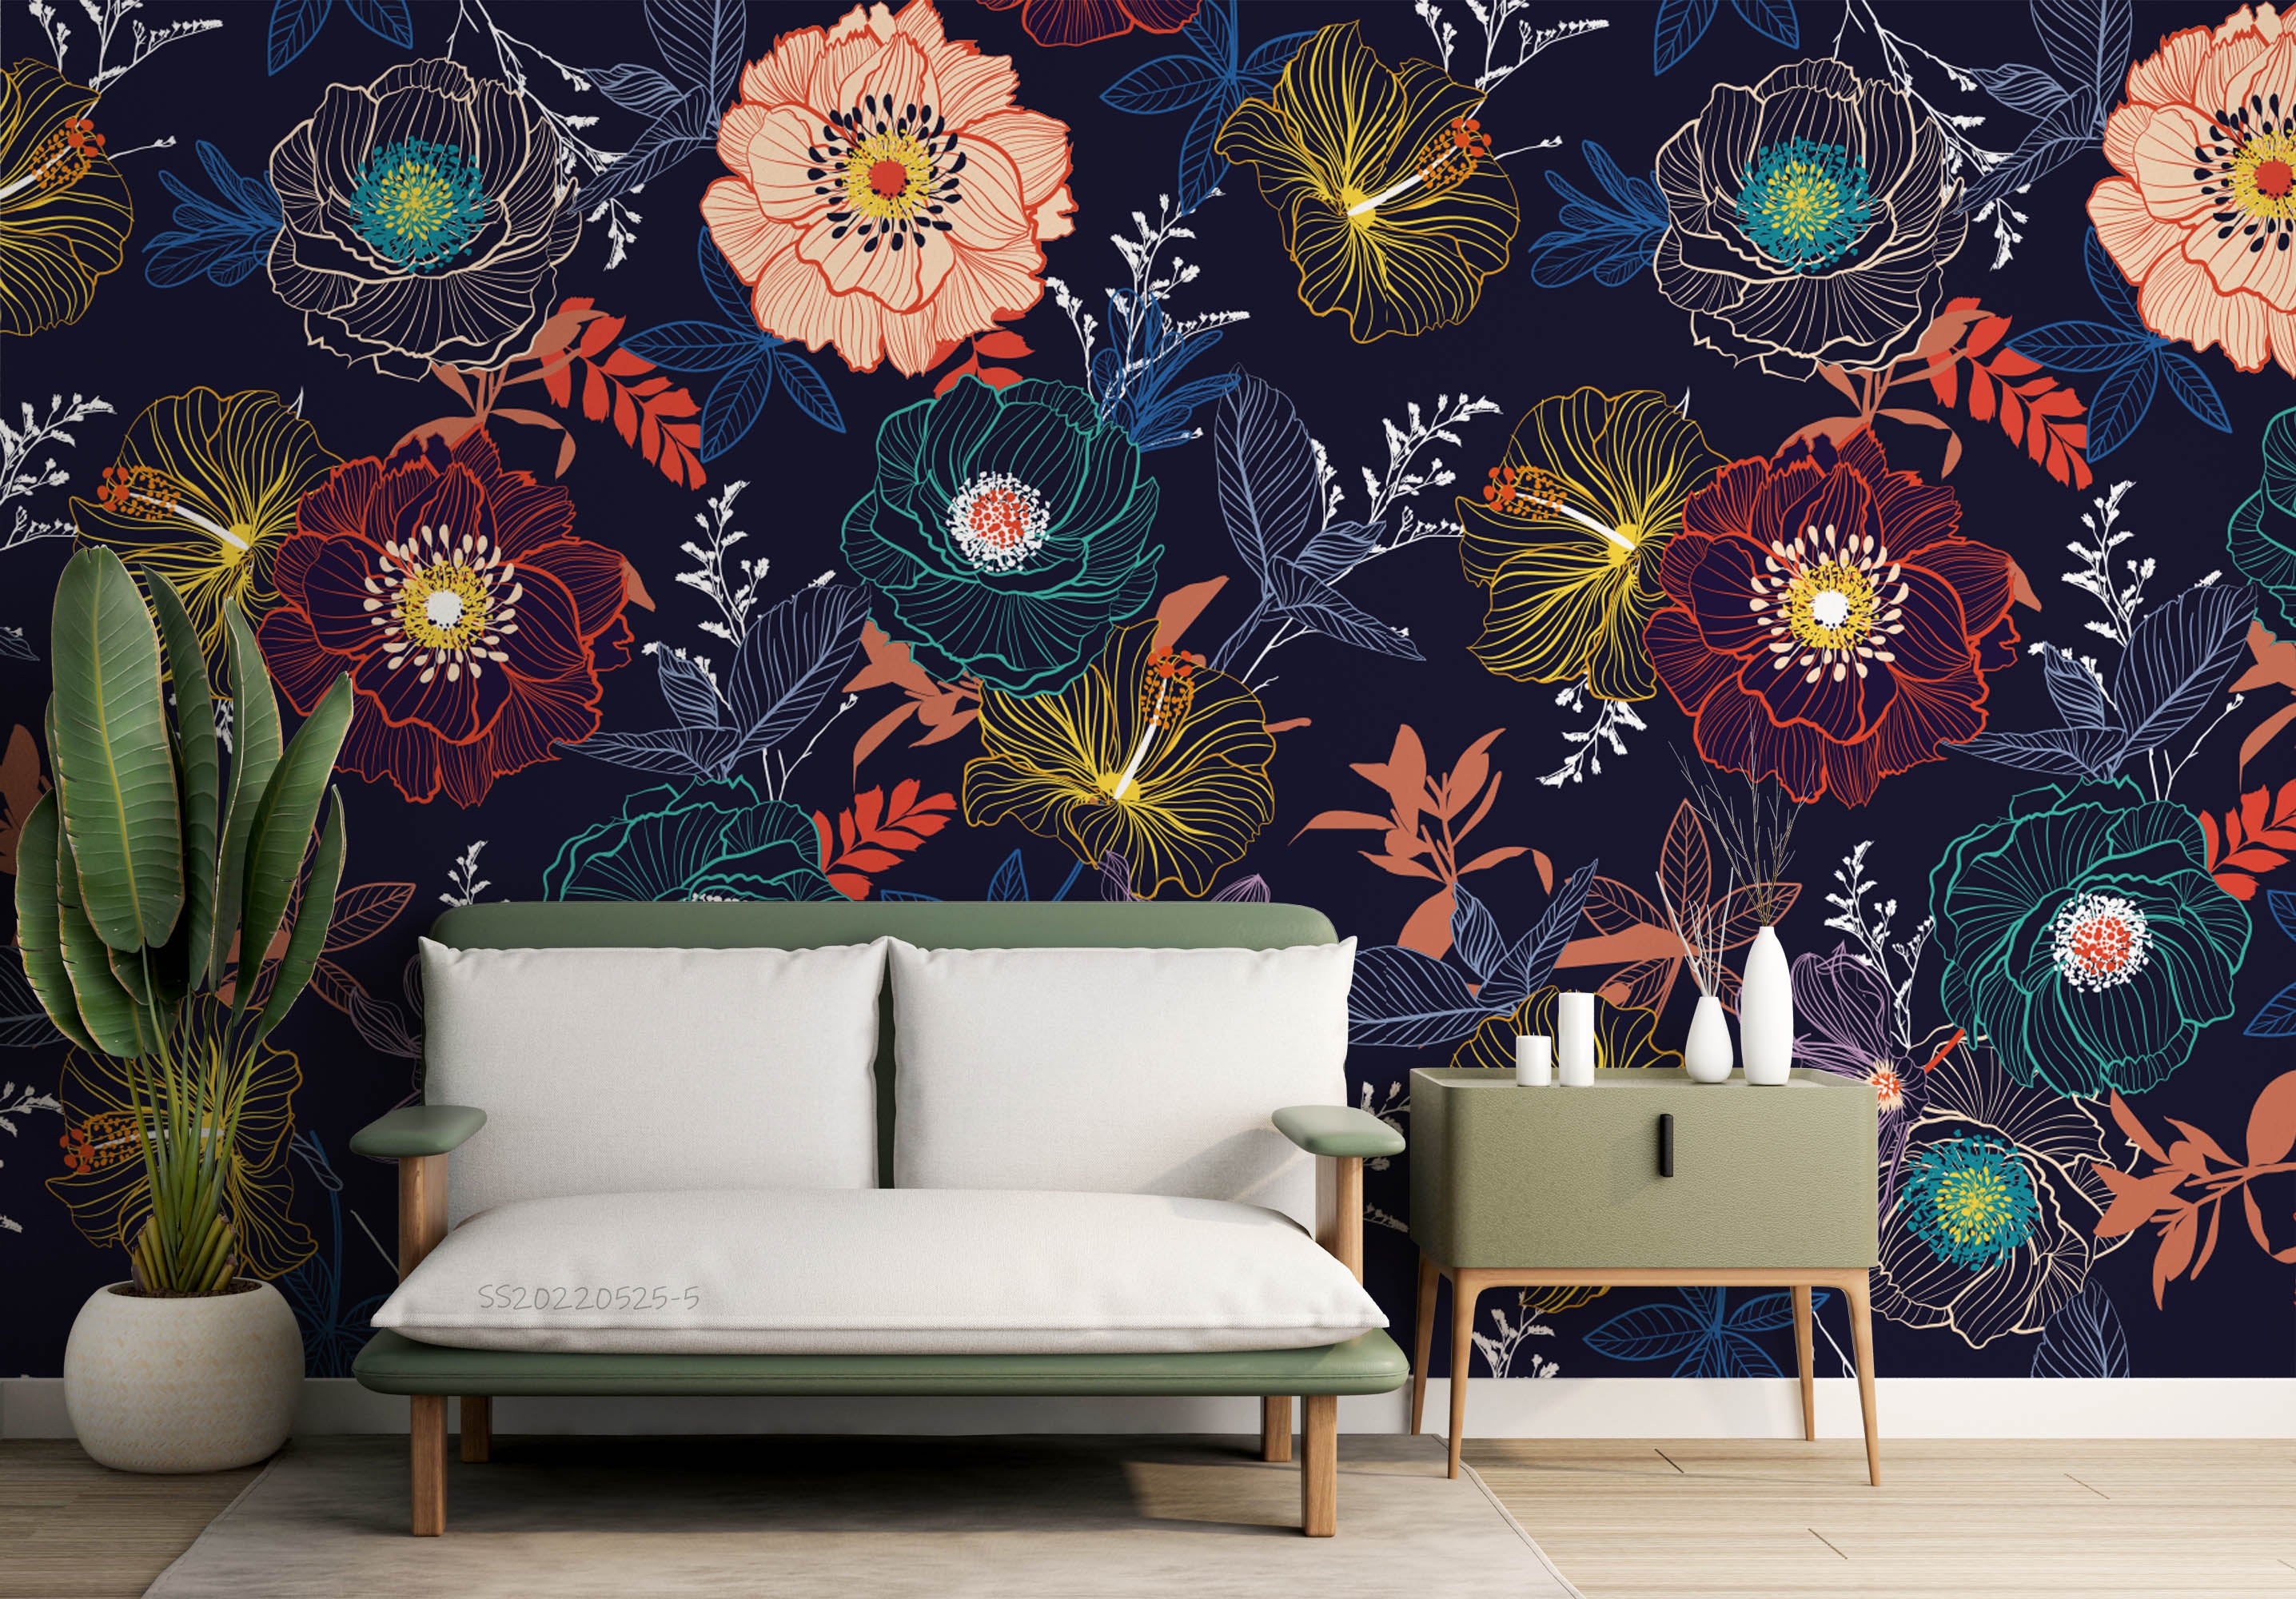 3D Vintage Floral Pattern Dark Background Wall Mural Wallpaper GD 930- Jess Art Decoration